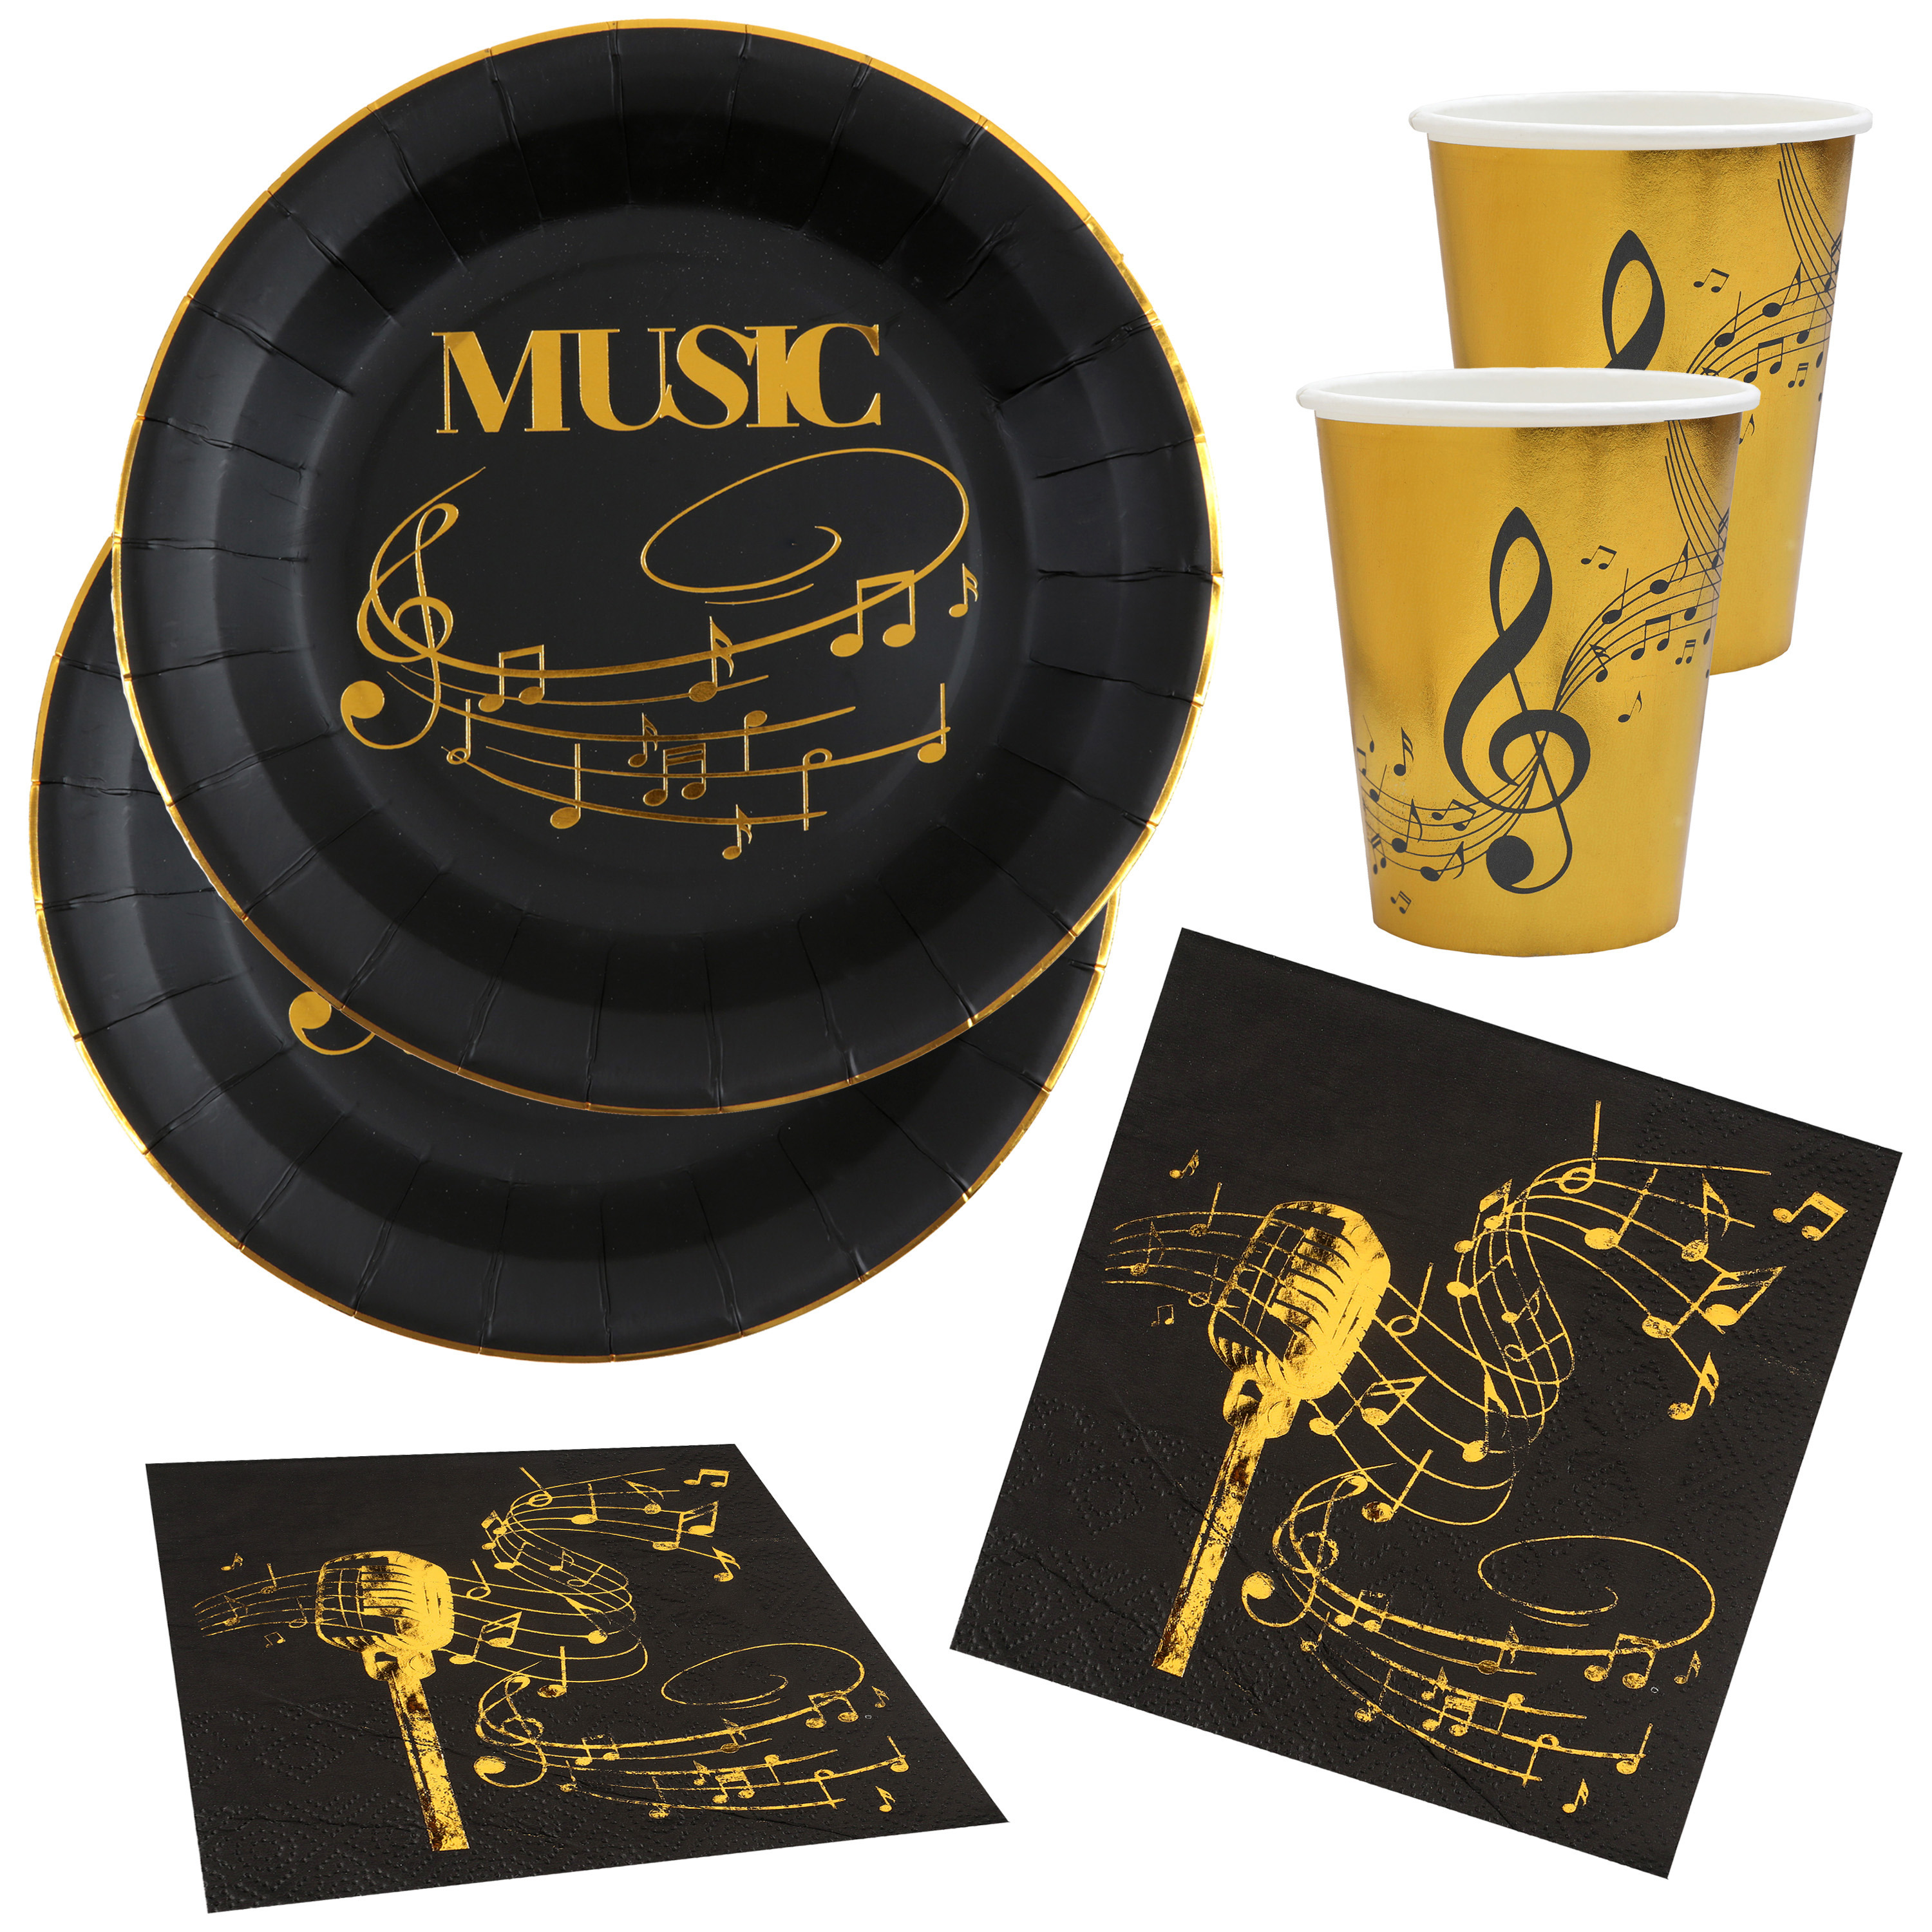 Muziek feest wegwerp servies set 10x bordjes-10x bekers-20x servetten goud-zwart